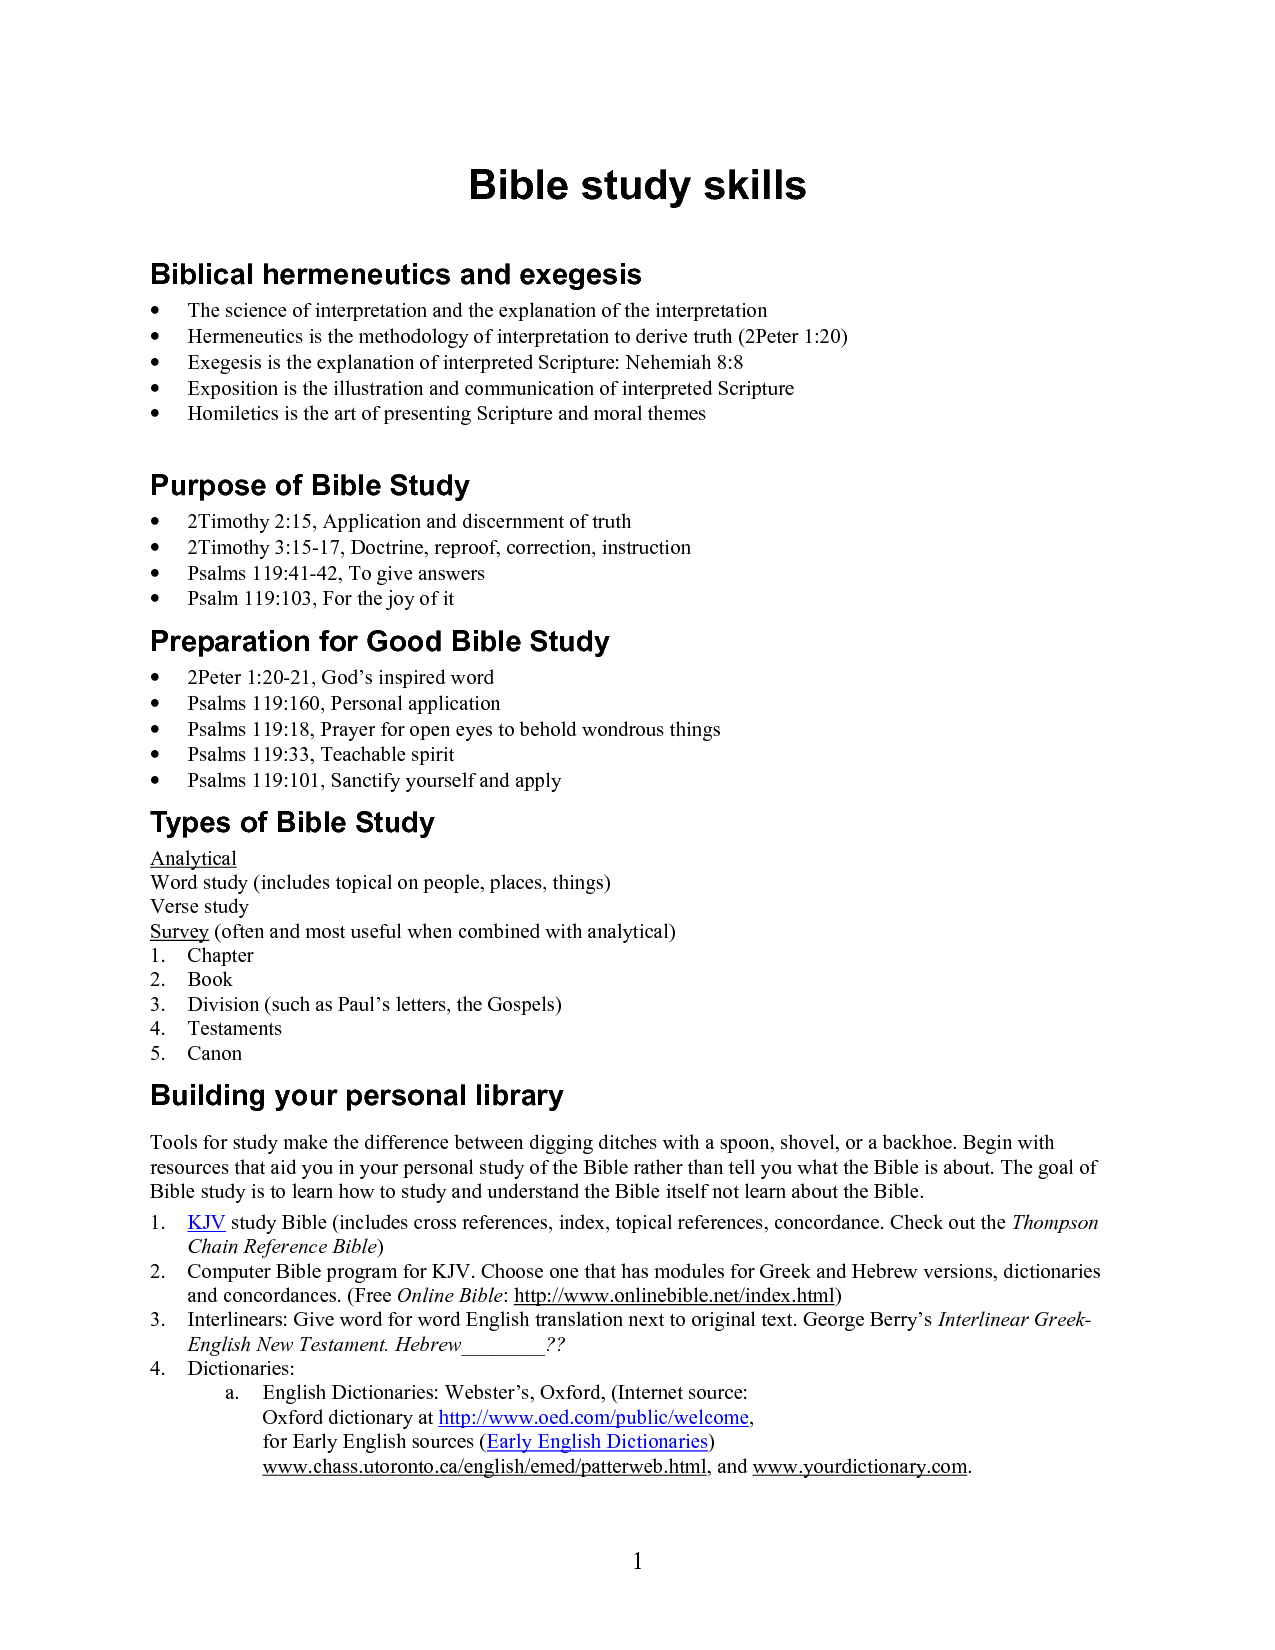 Printable Bible Study Lessons - Printable 360 Degree - Free Printable Bible Study Lessons With Questions And Answers